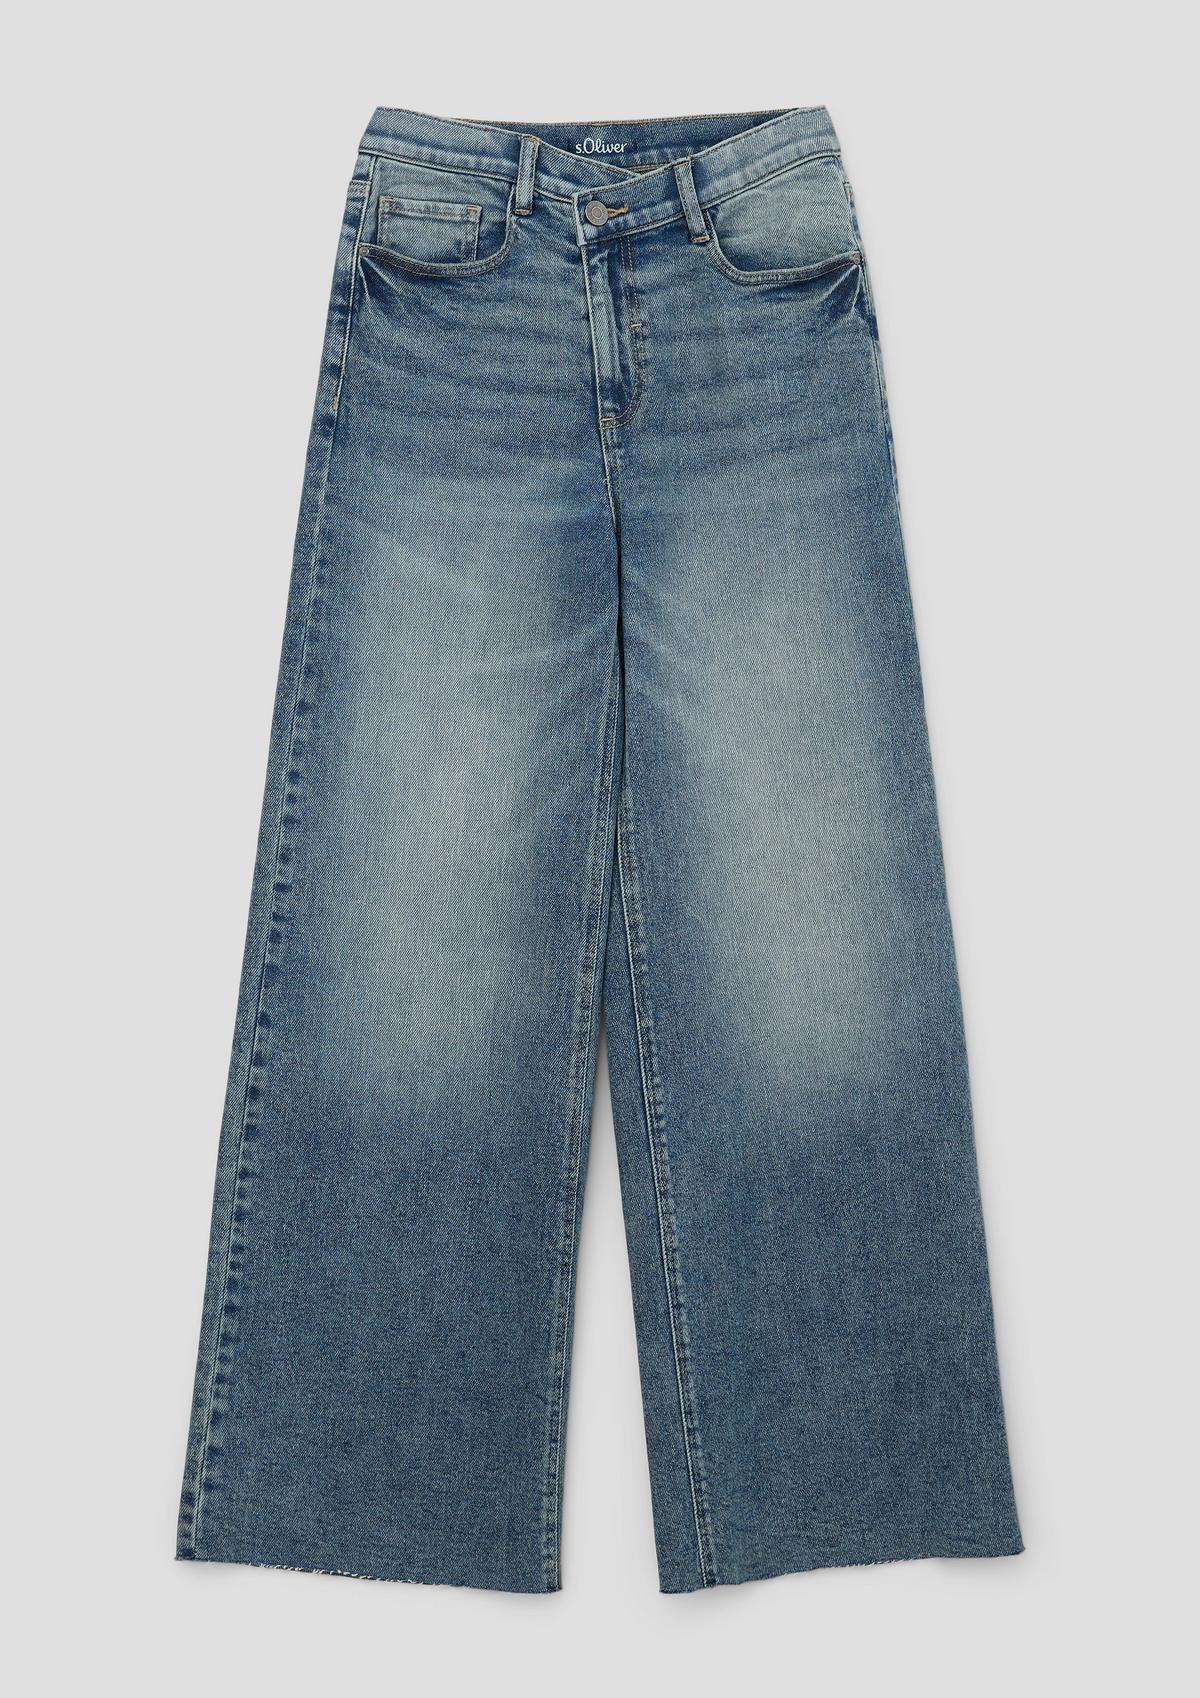 Jeans / Regular Fit / Super High Rise / Wide Leg / asymmetrischem Bund